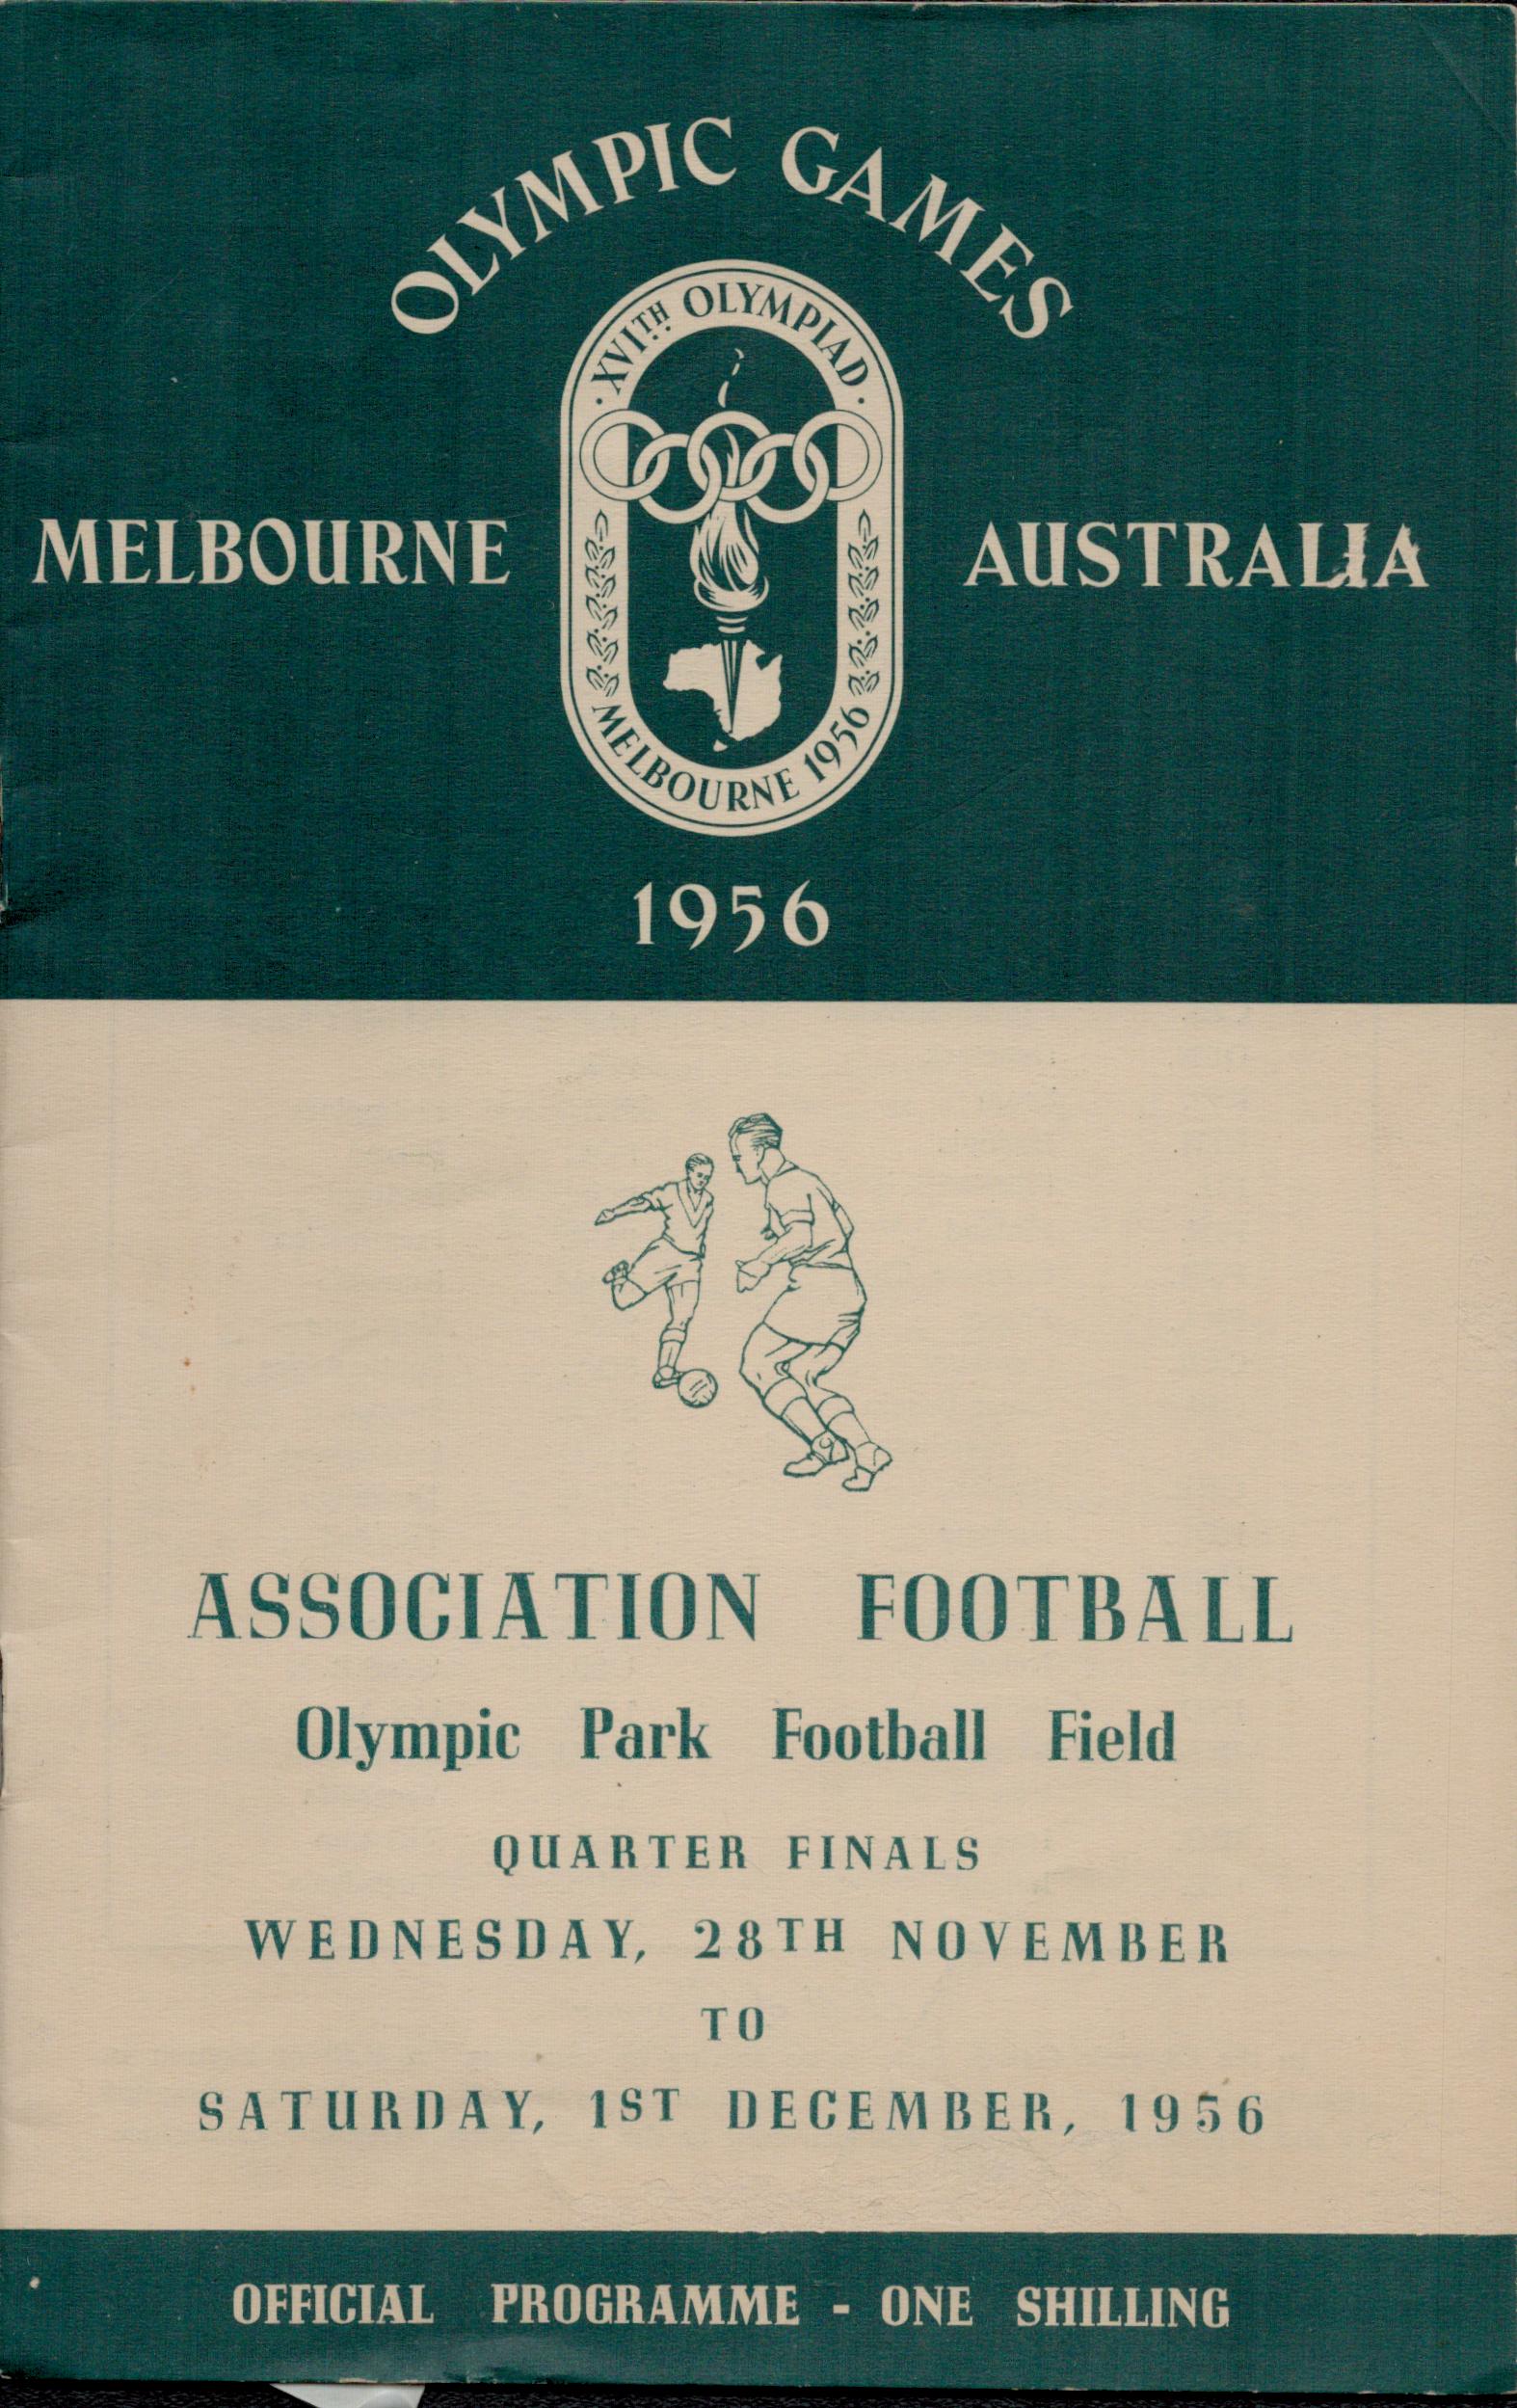 Vintage unsigned Olympic Games Melbourne Australia Official Programme - One Shilling. 'Association